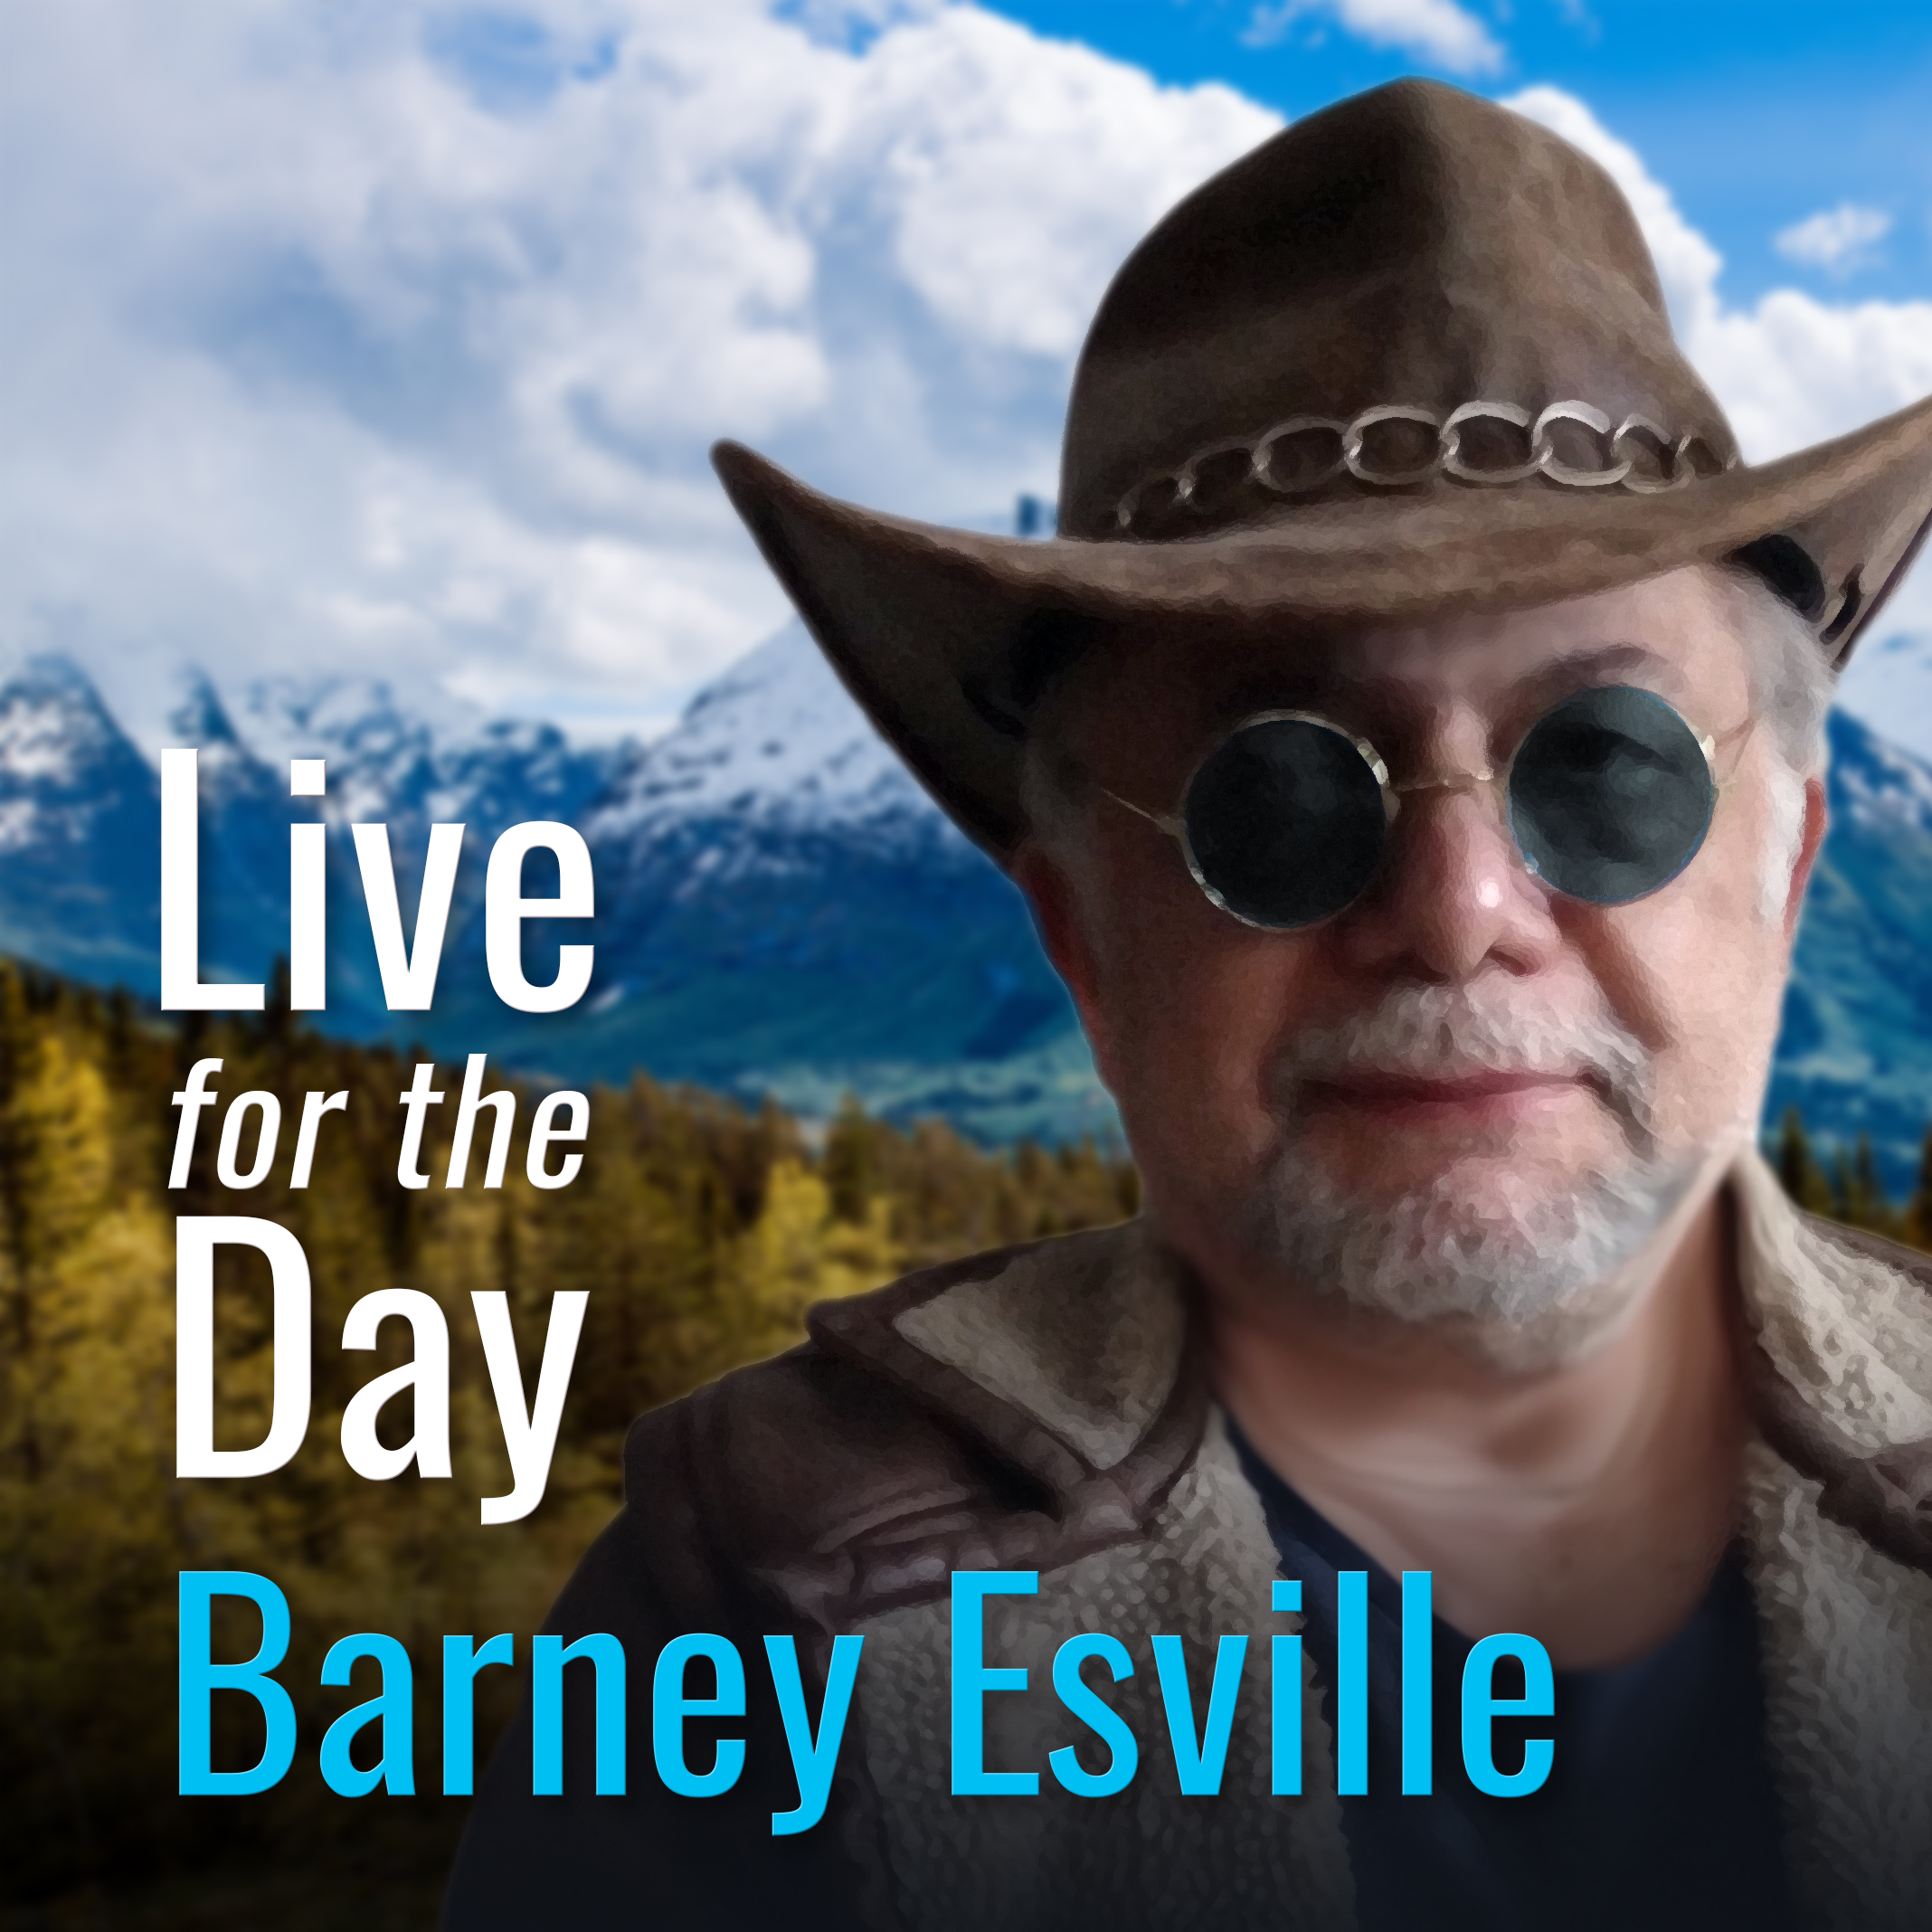 Barney Esville